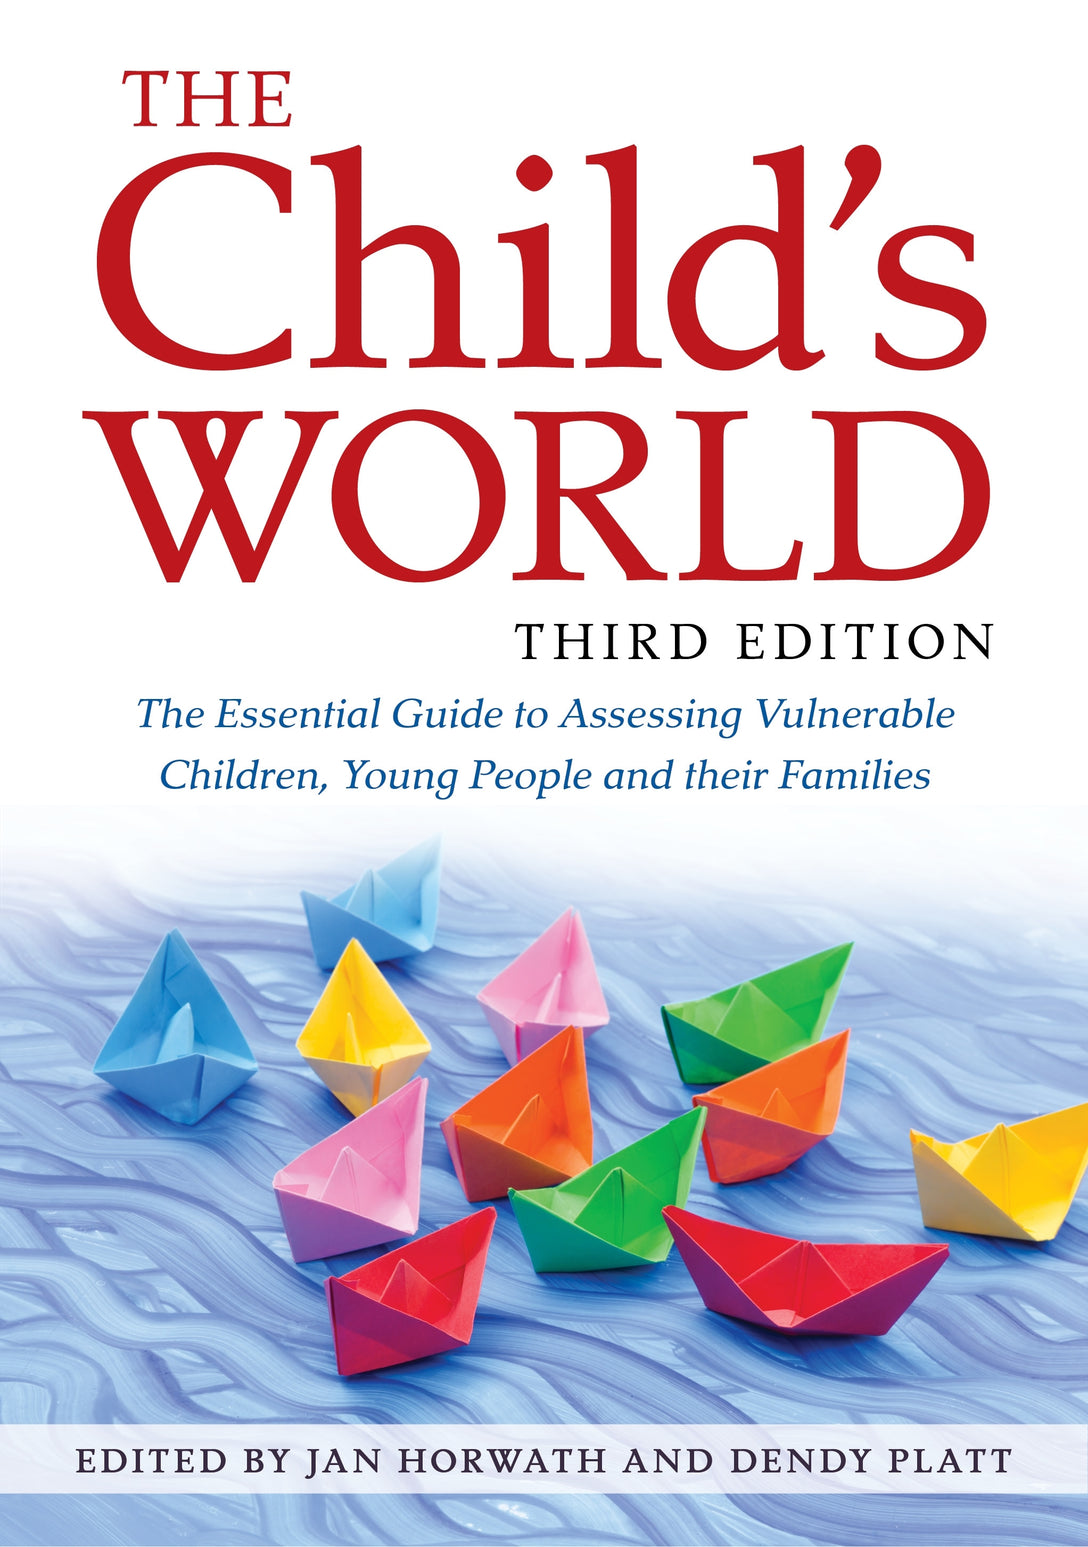 The Child's World, Third Edition by Jan Horwath, Dendy Platt, No Author Listed